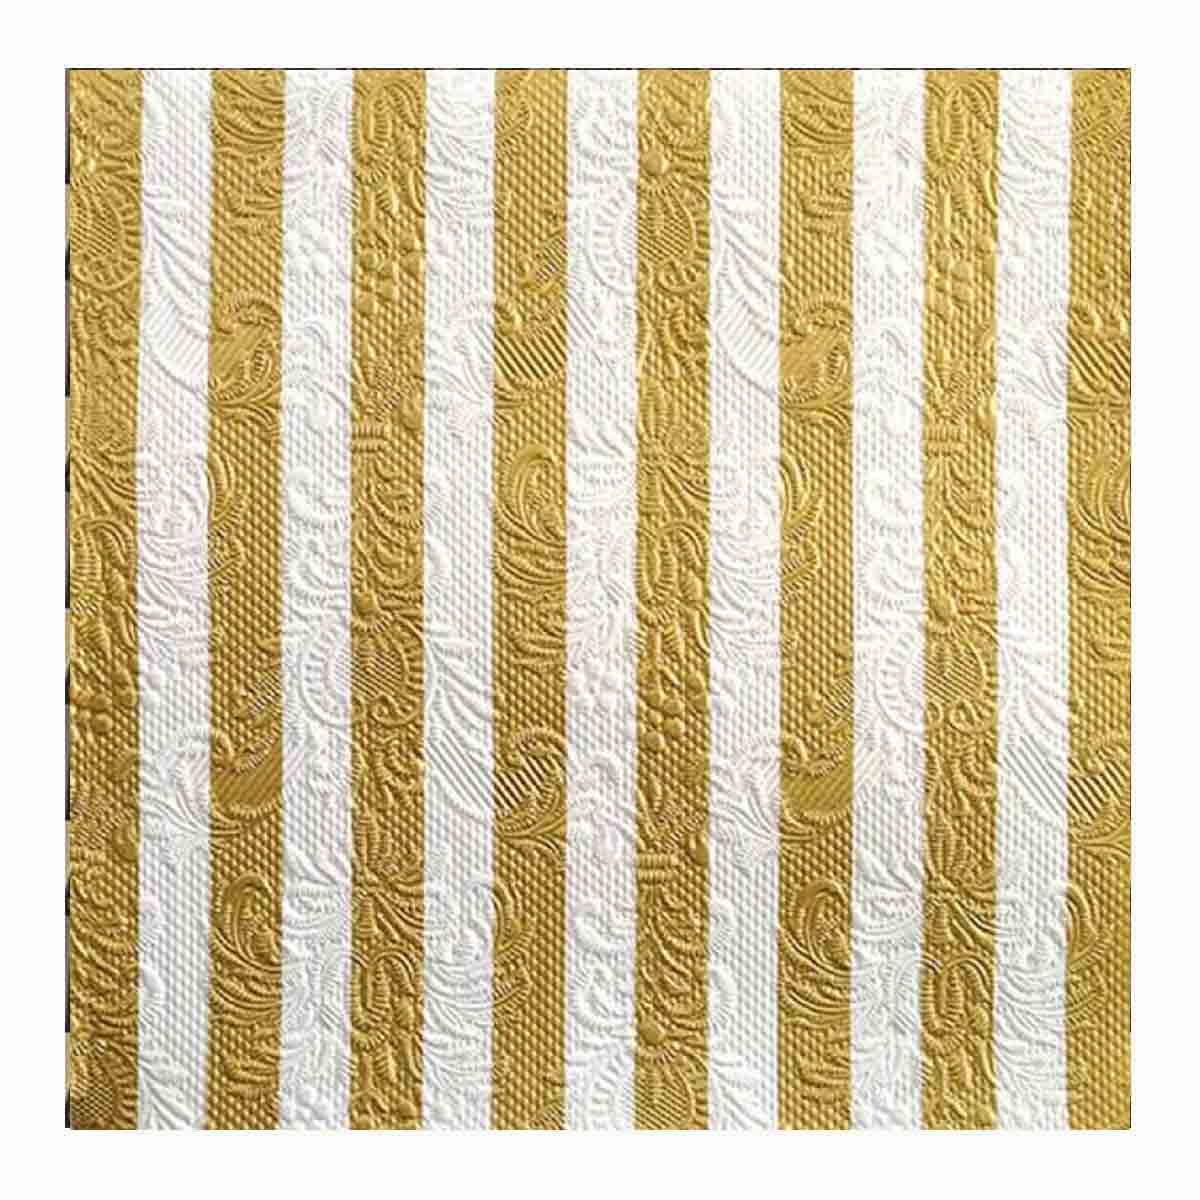 Napkin Stripes gold Set of 15